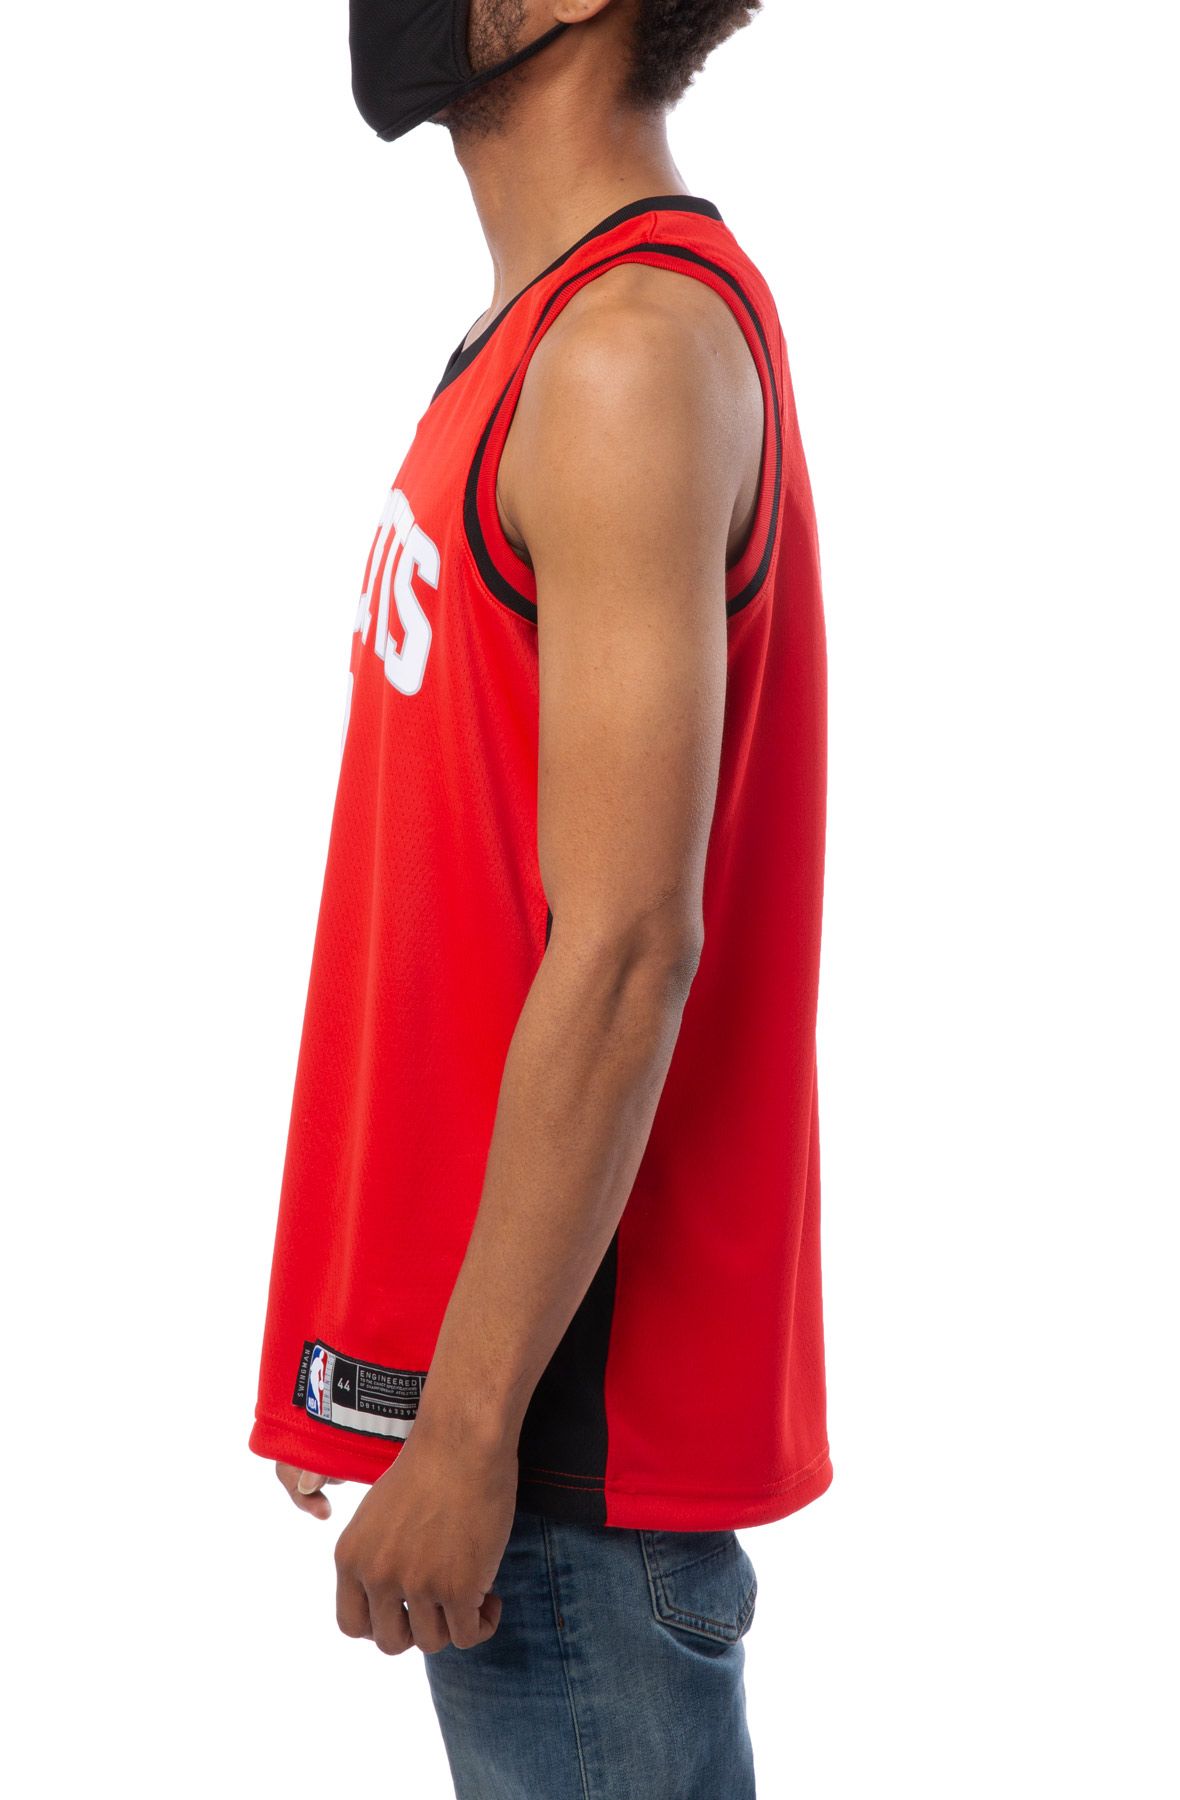 Nike Men's NBA Houston Rockets James Harden #13 Dri-FIT White T-Shirt –  Stephen Sports